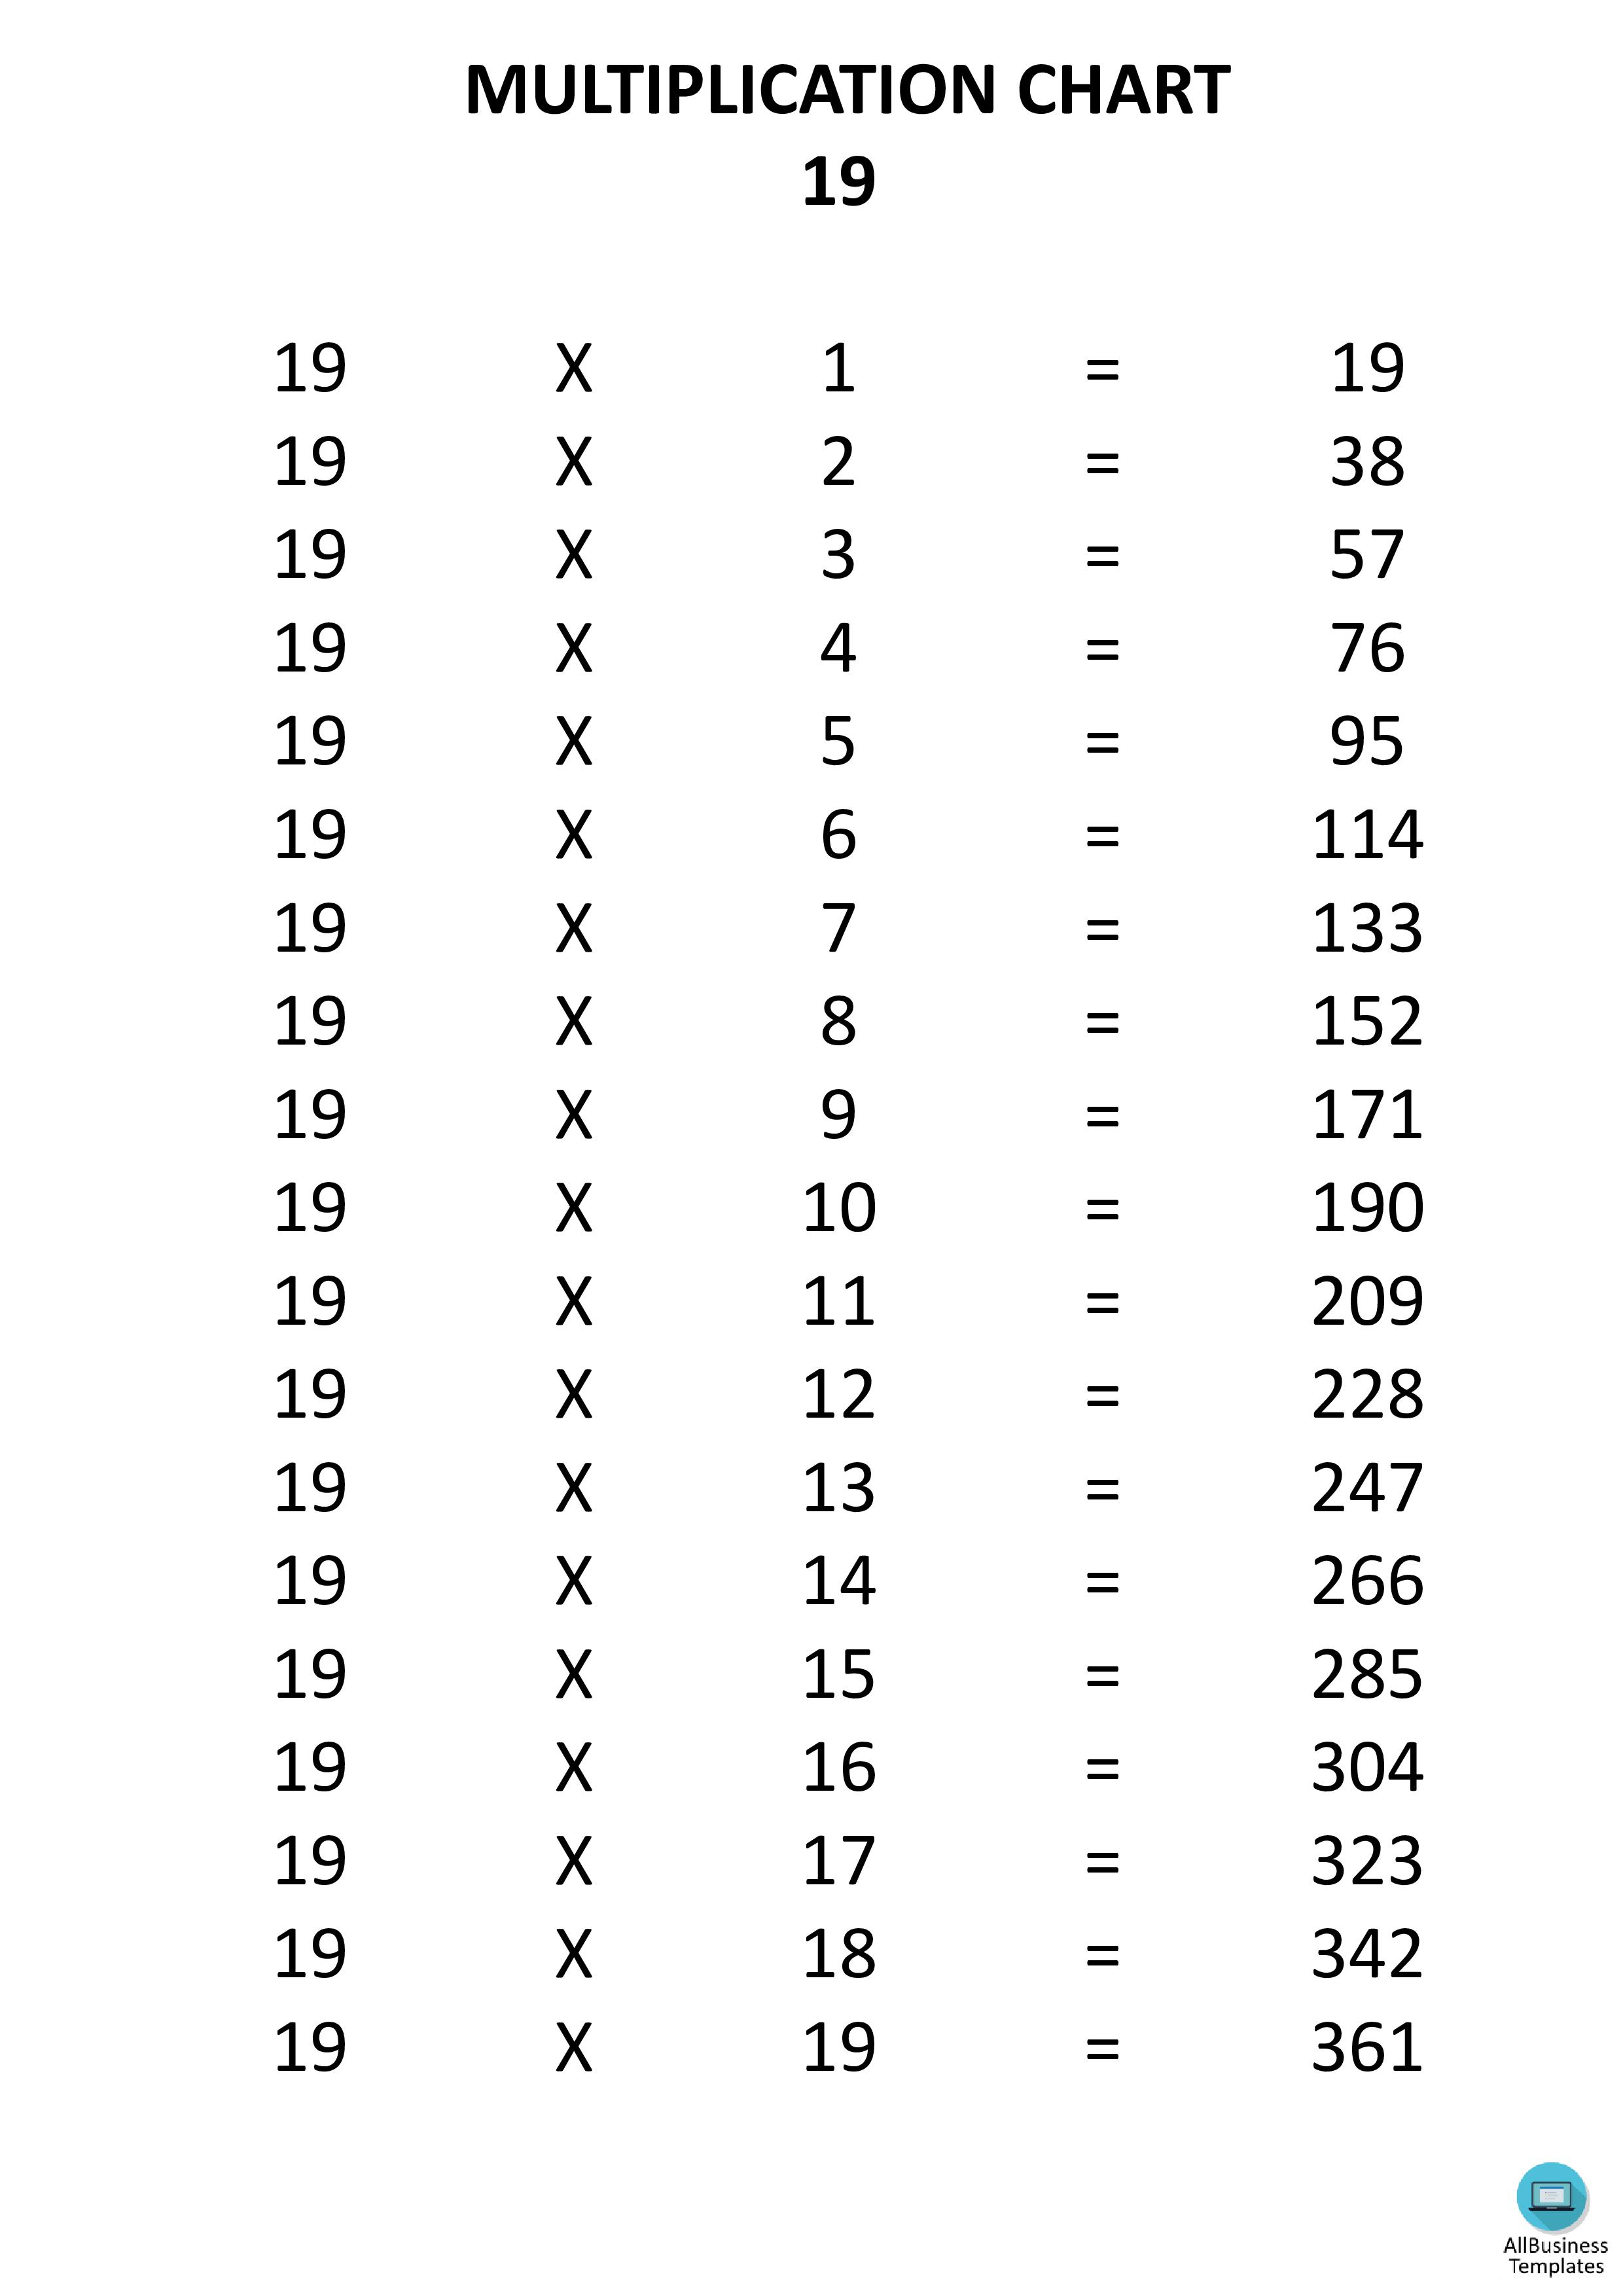 multiplication chart x19 plantilla imagen principal